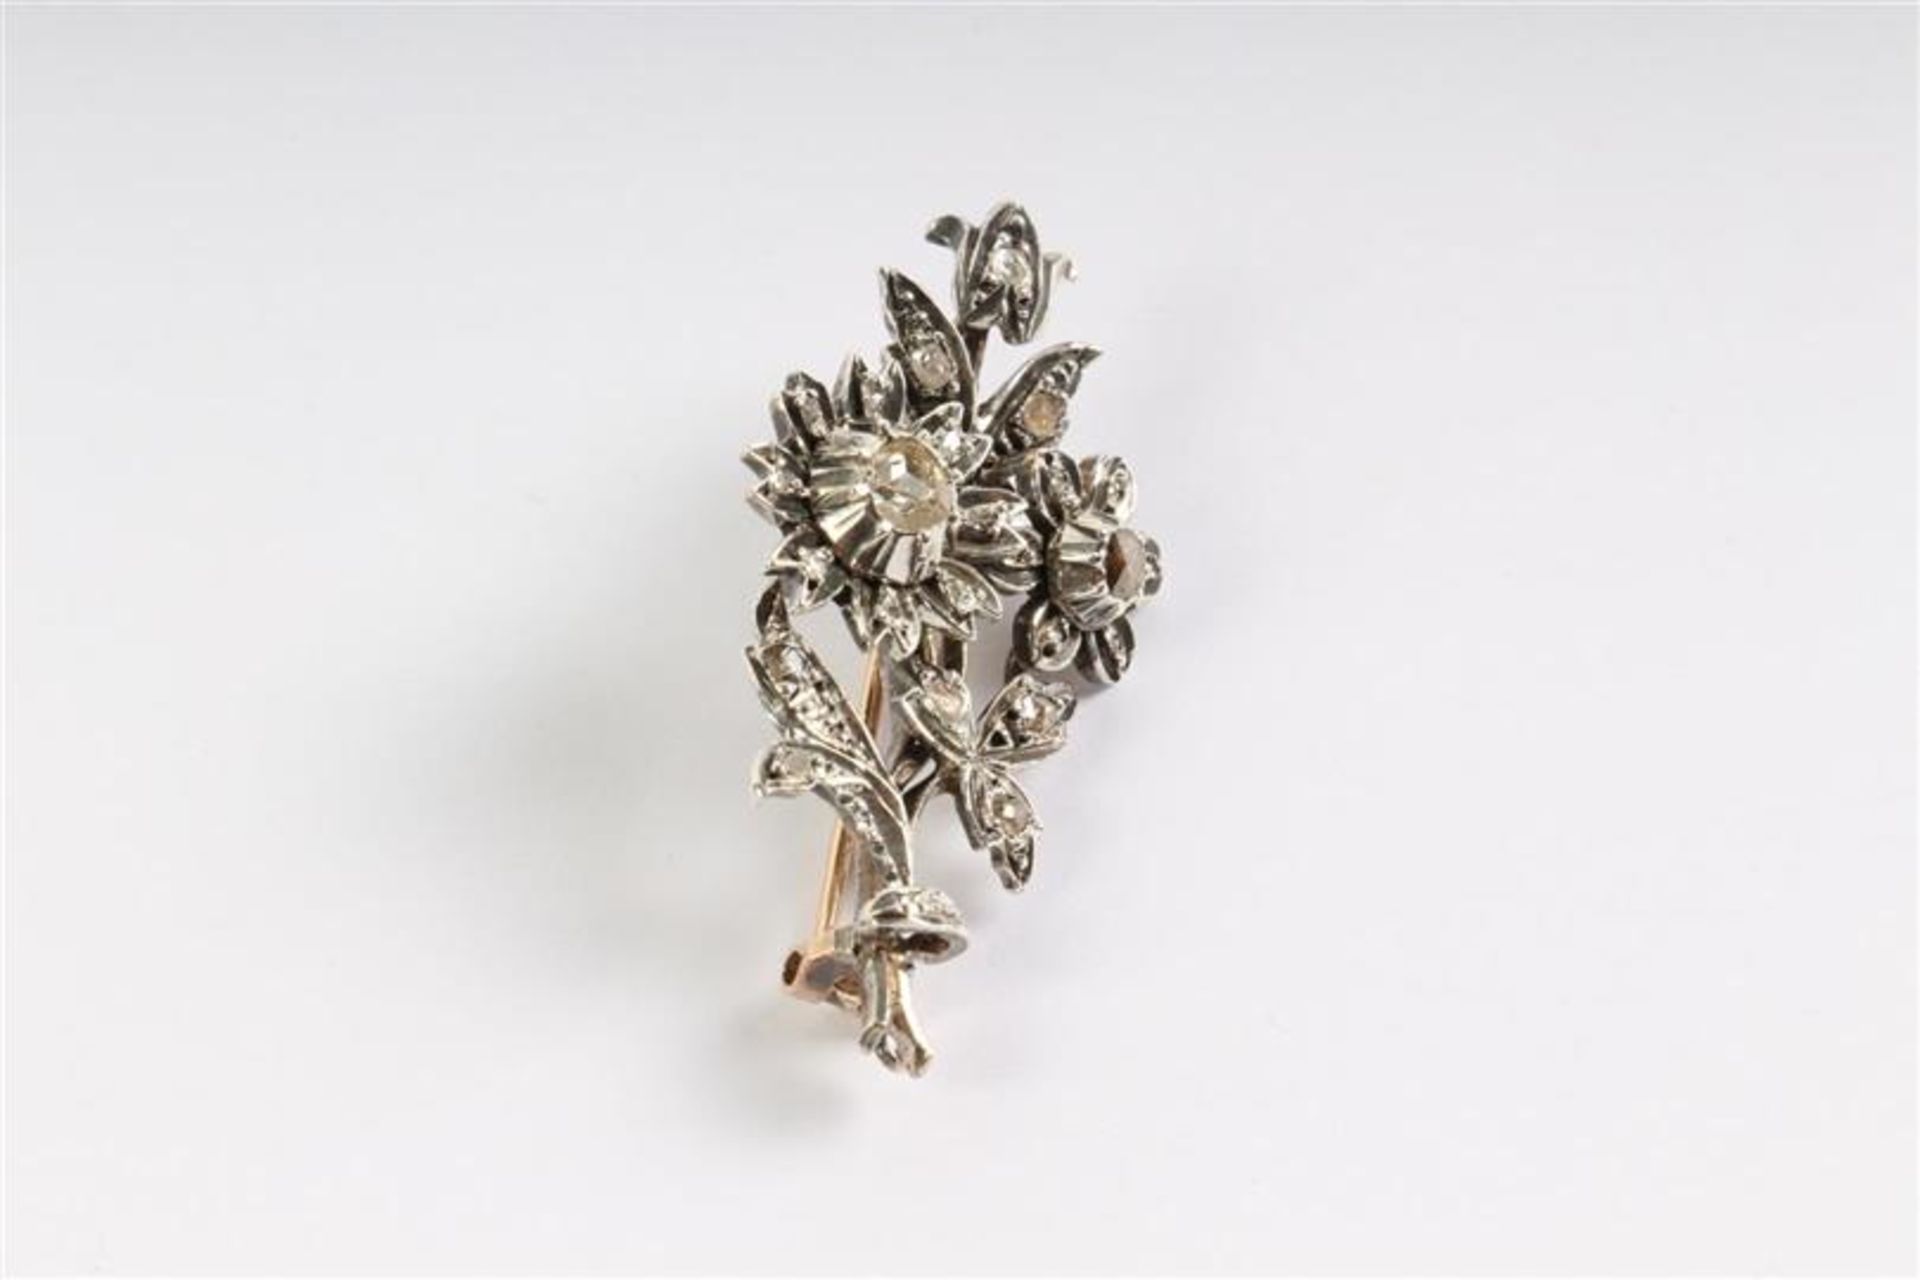 Goud zilveren takbroche met roosdiamant, Hollands gekeurd. Gewicht: 6.6 g. - Bild 2 aus 3